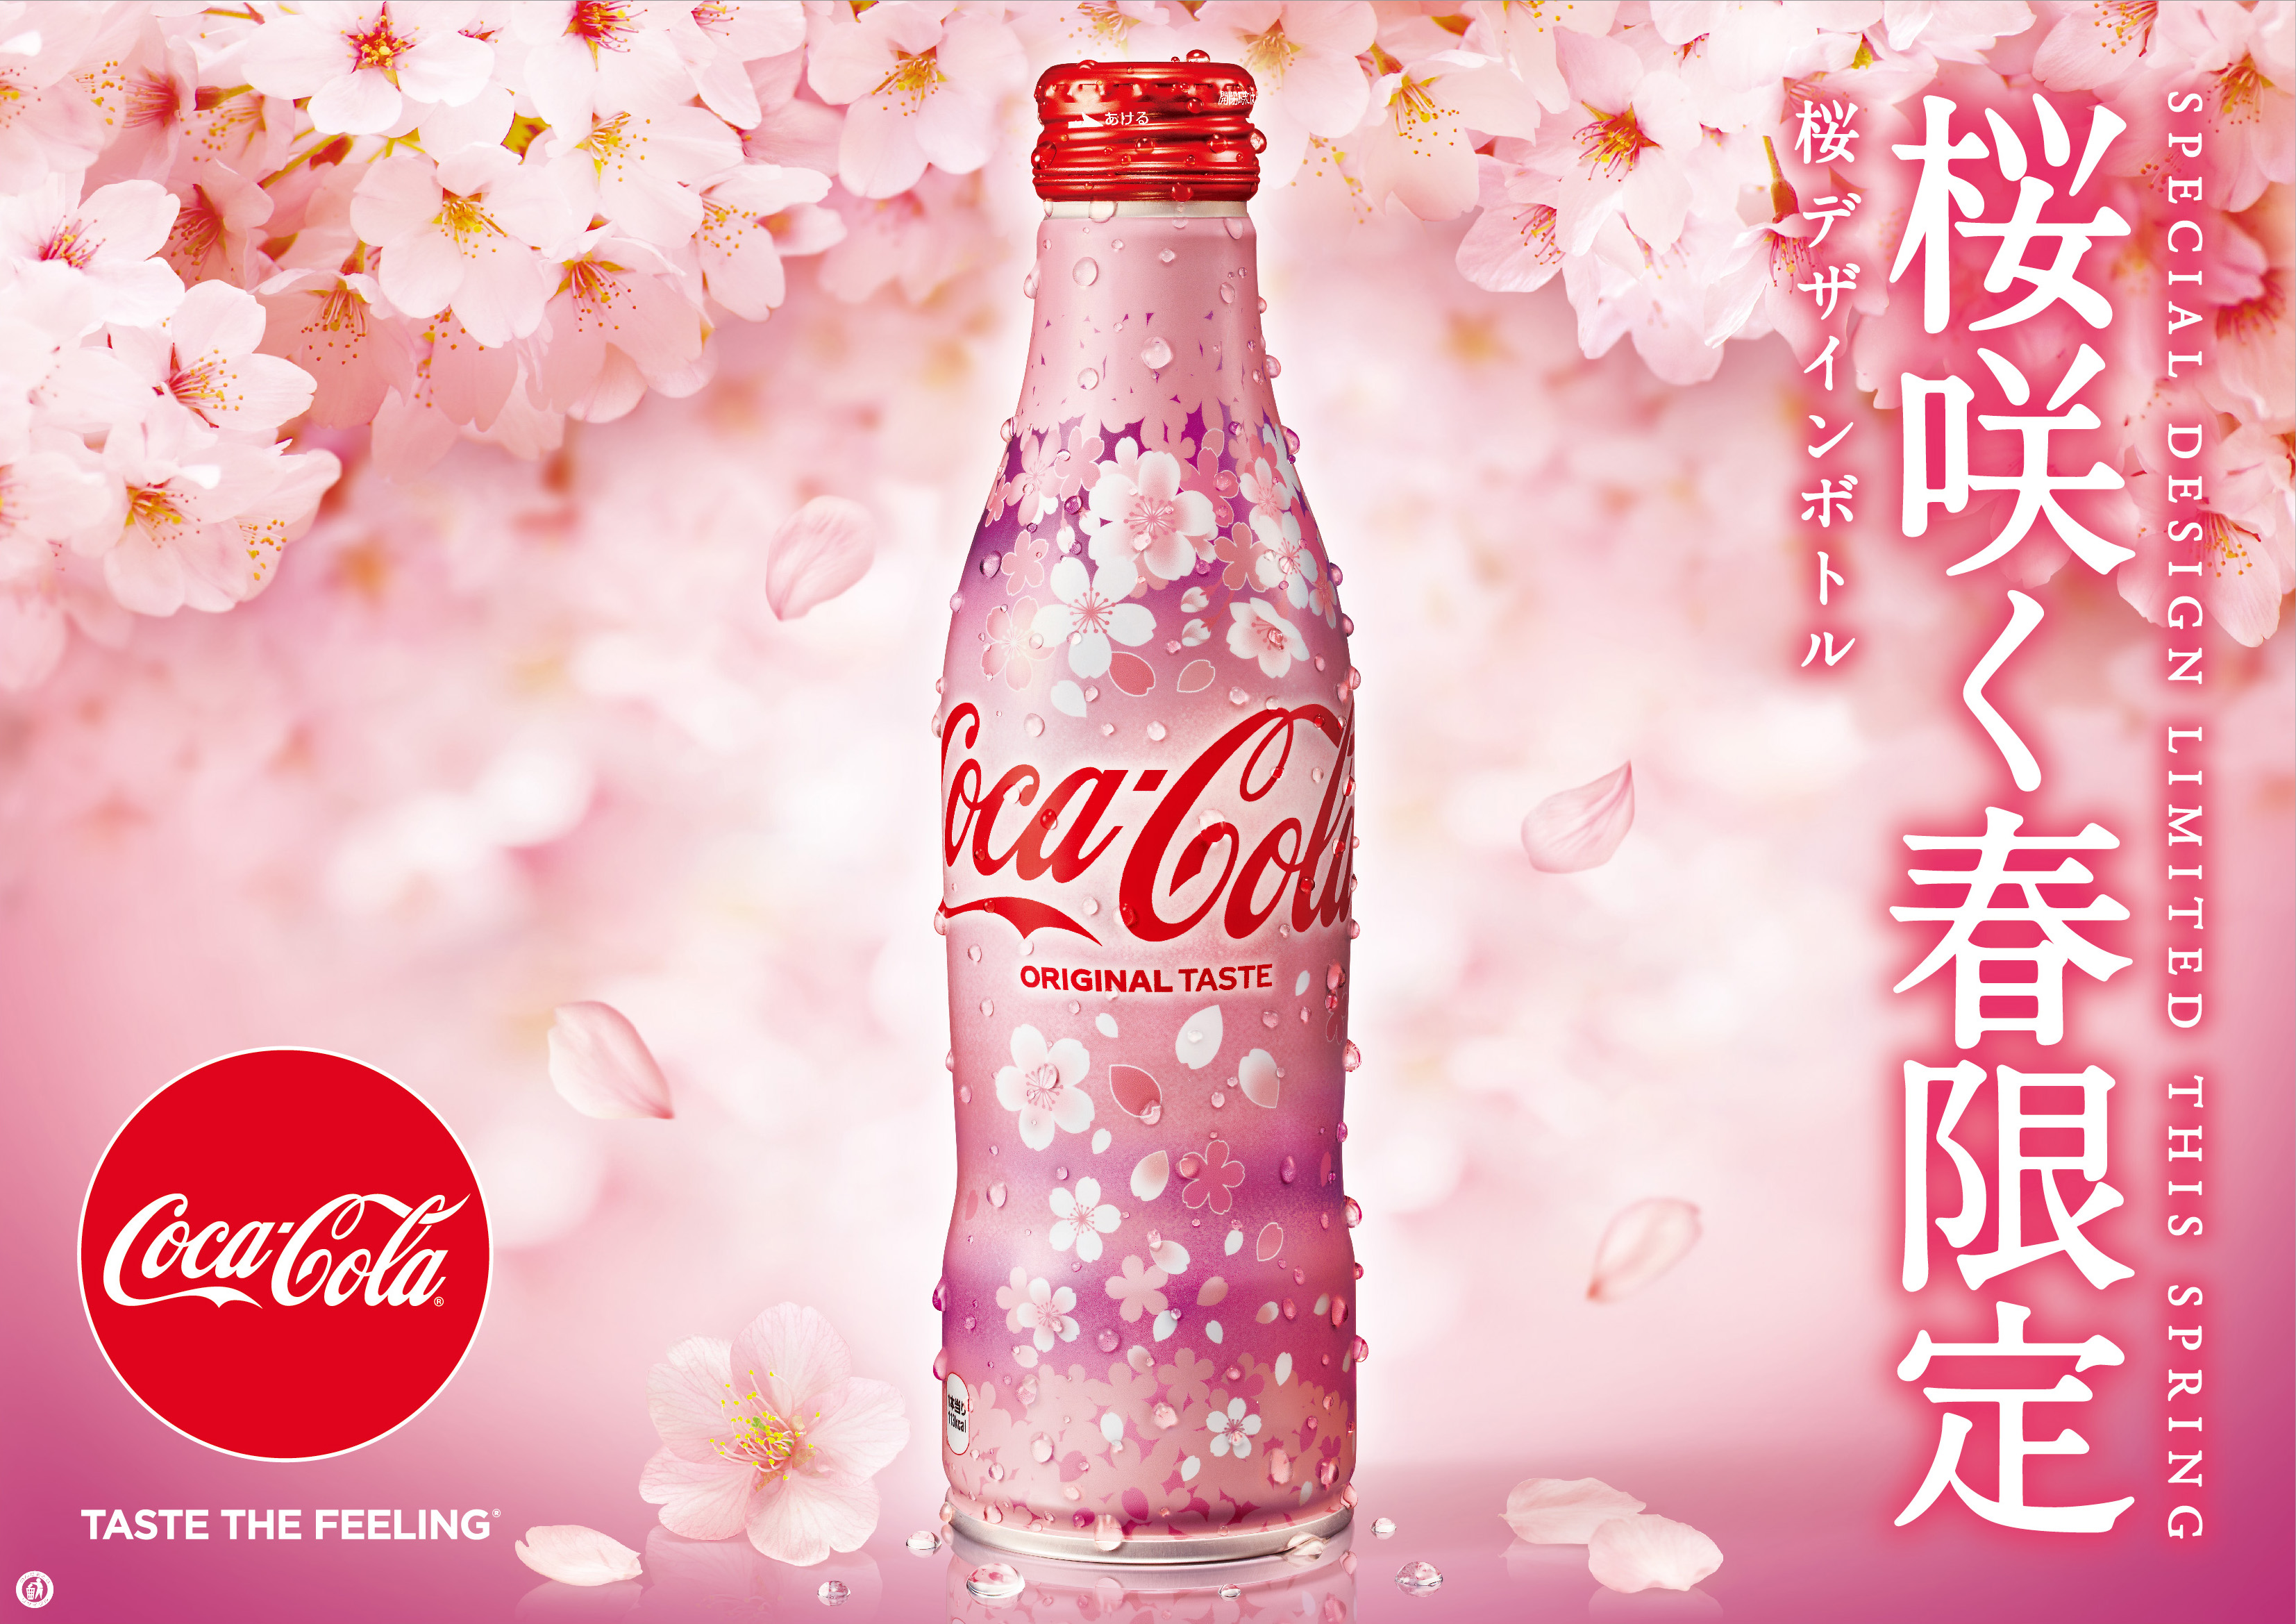 CocaCola Japan unveils new sakura design bottle for cherry blossom